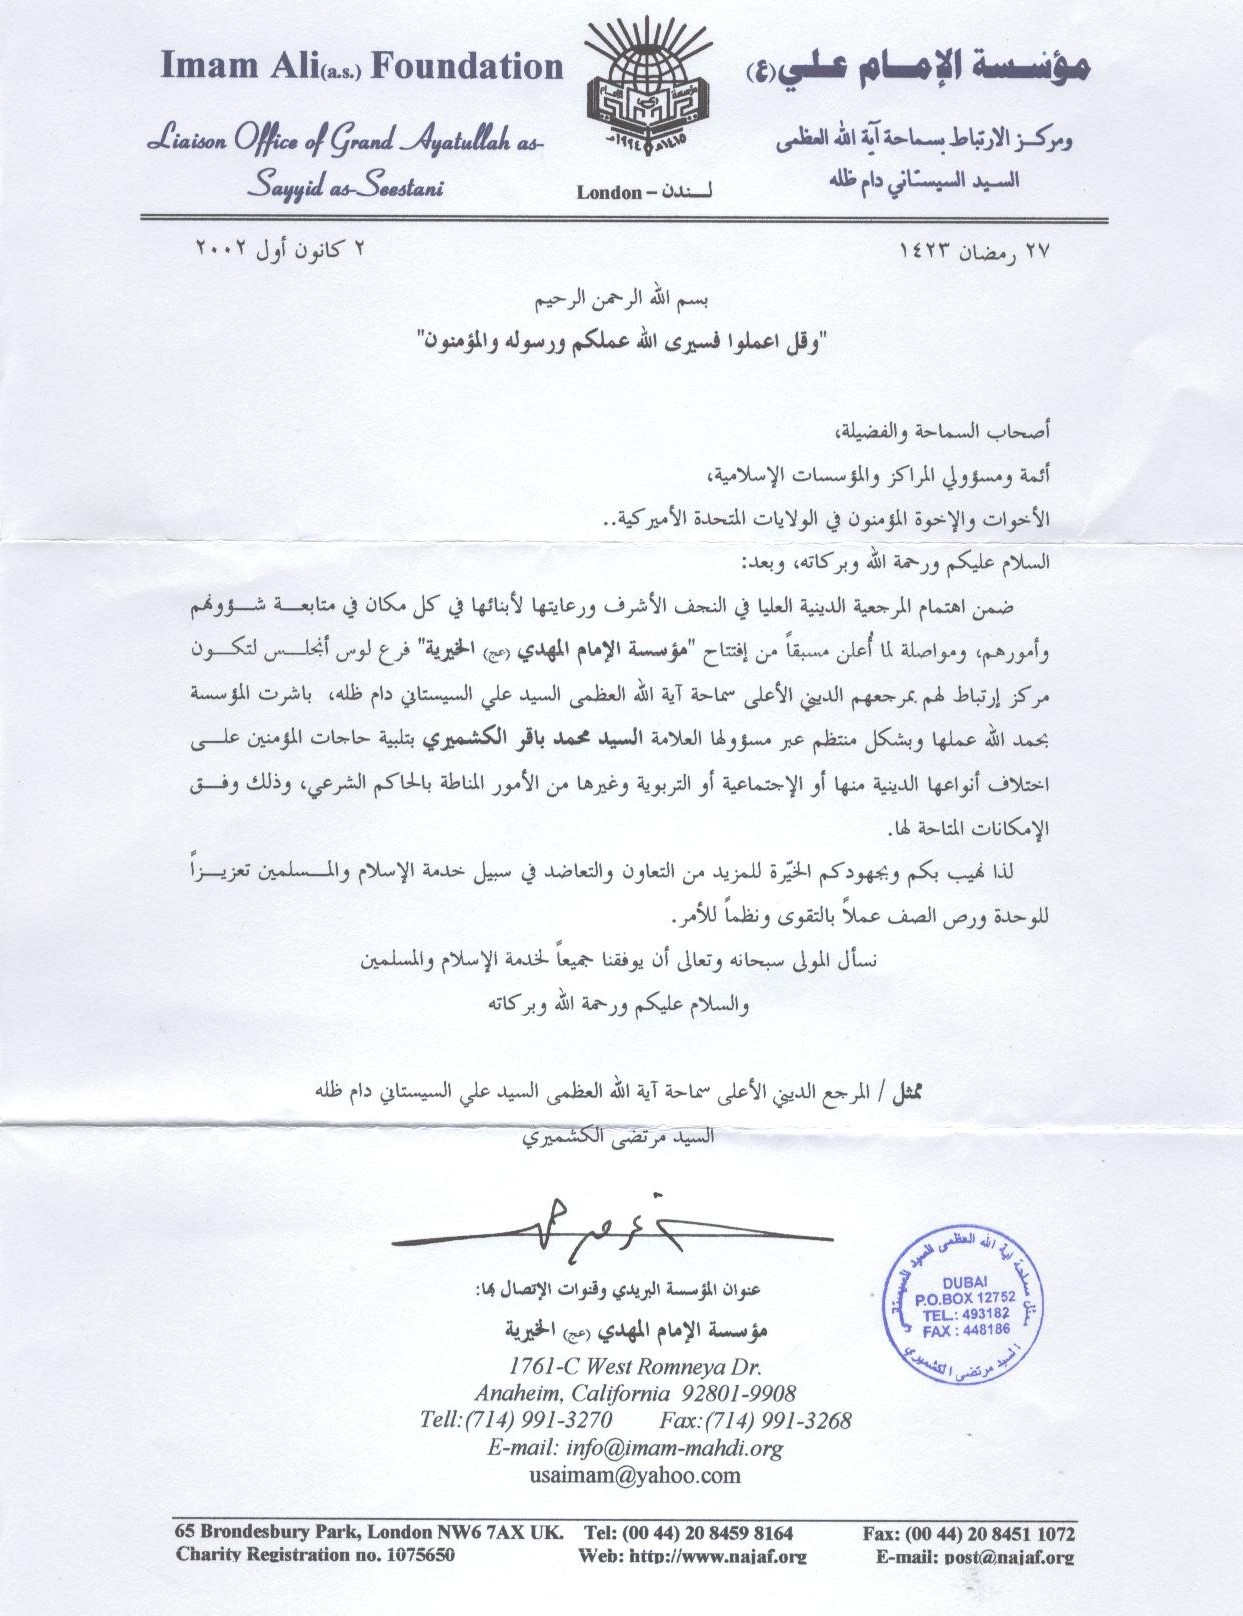 Declaration of the Special Representative of the jurist, H.E. Sayyid Murtadha al-Kashmiri, in Arabic.